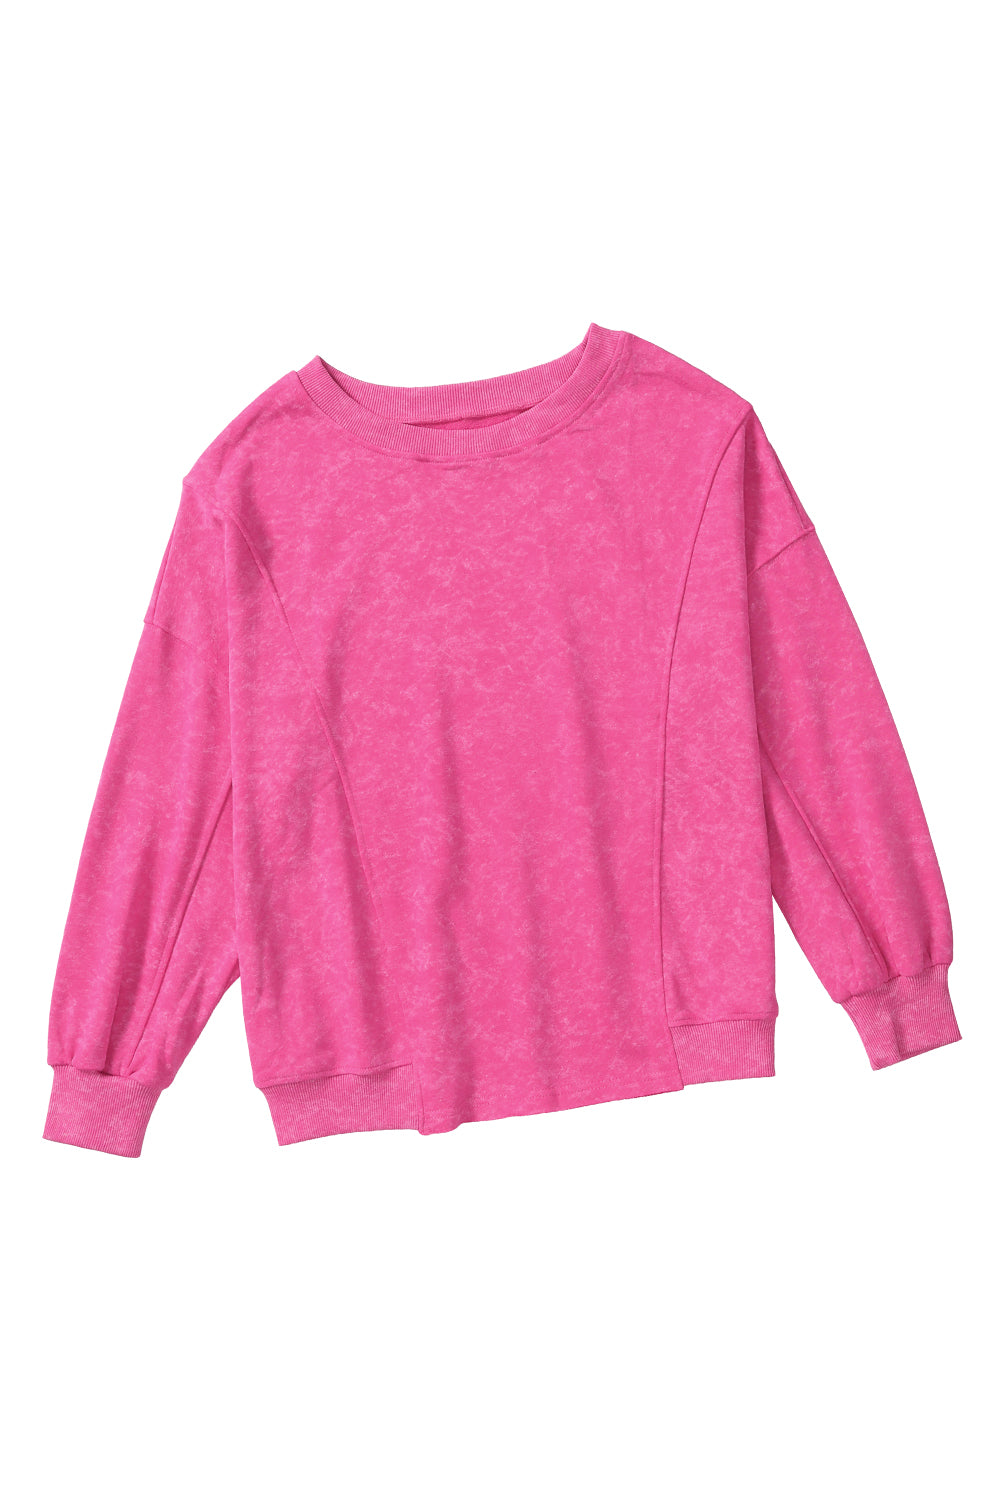 Blank Sweatshirt - Rosy Distressed Casual Loose Pullover Sweatshirt Customized